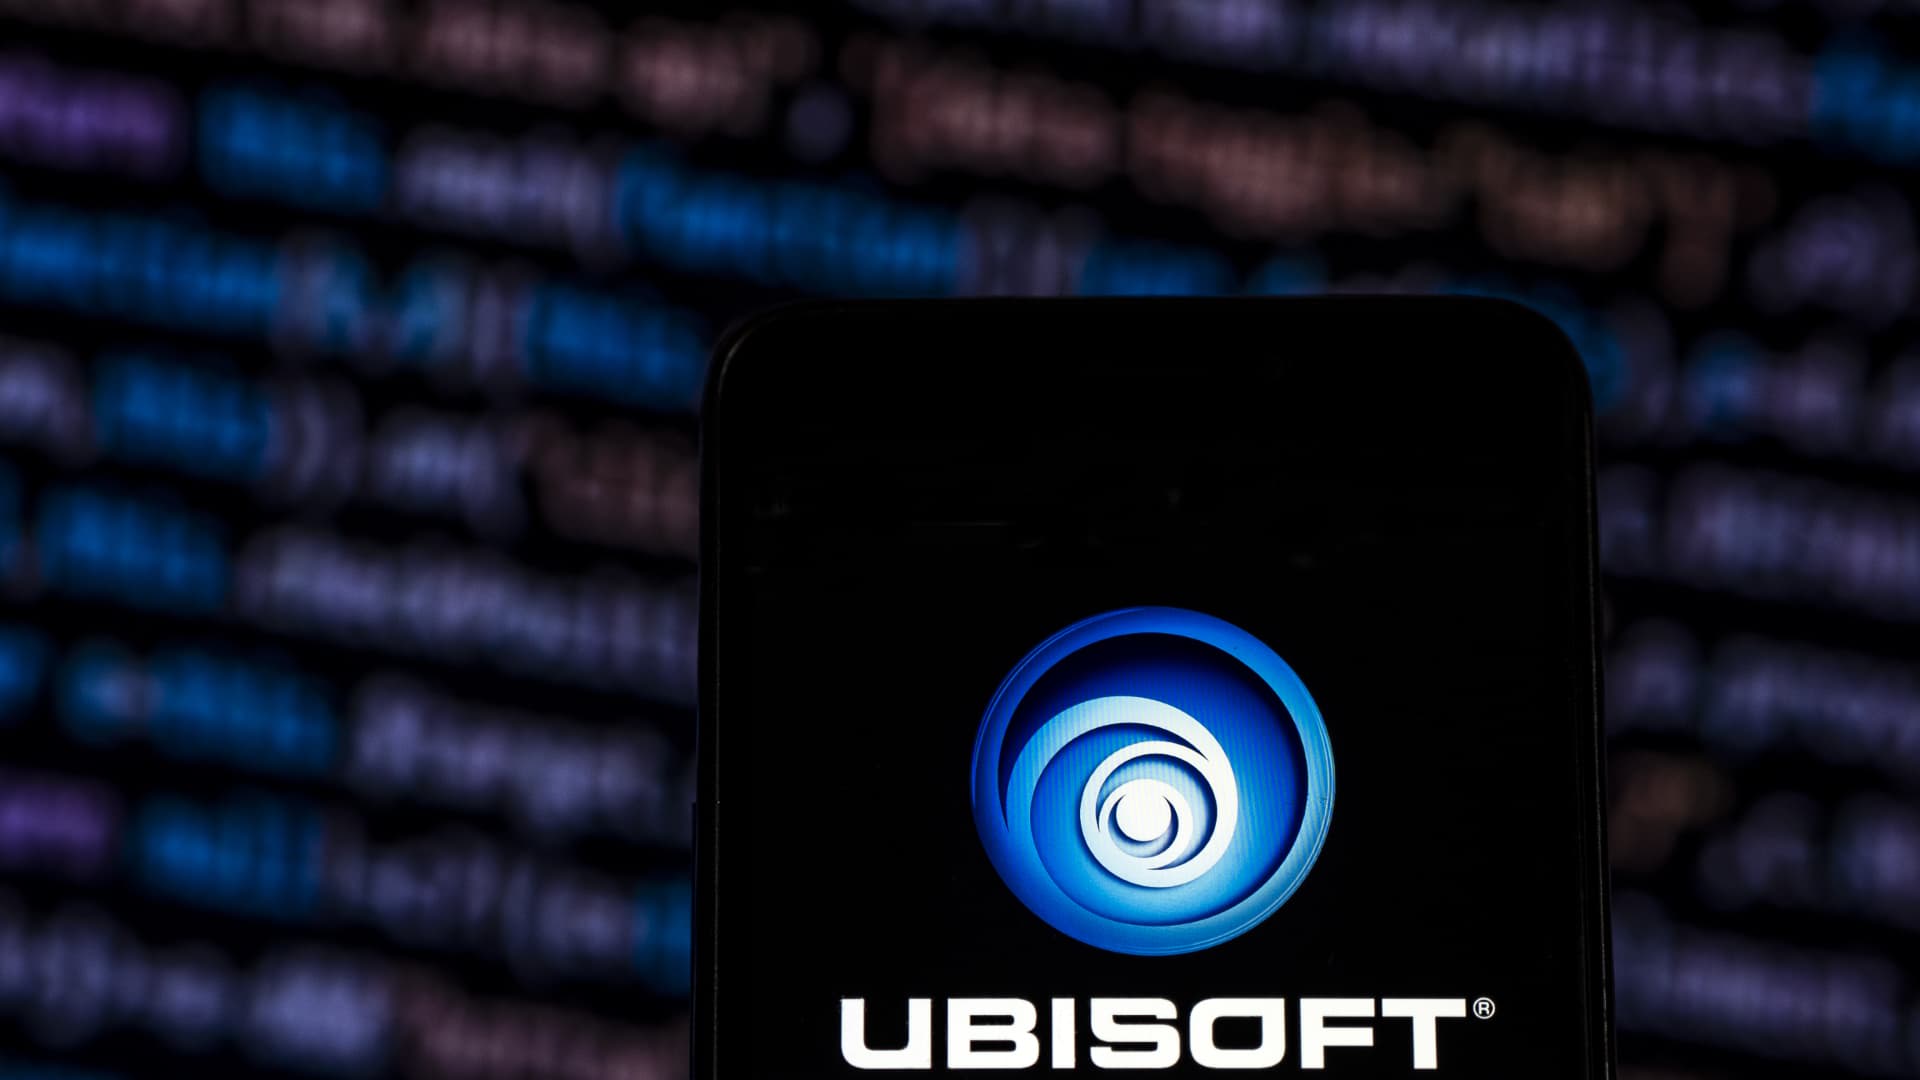 Ubisoft (UBI) stock tanks after guidance cut, games cancelled